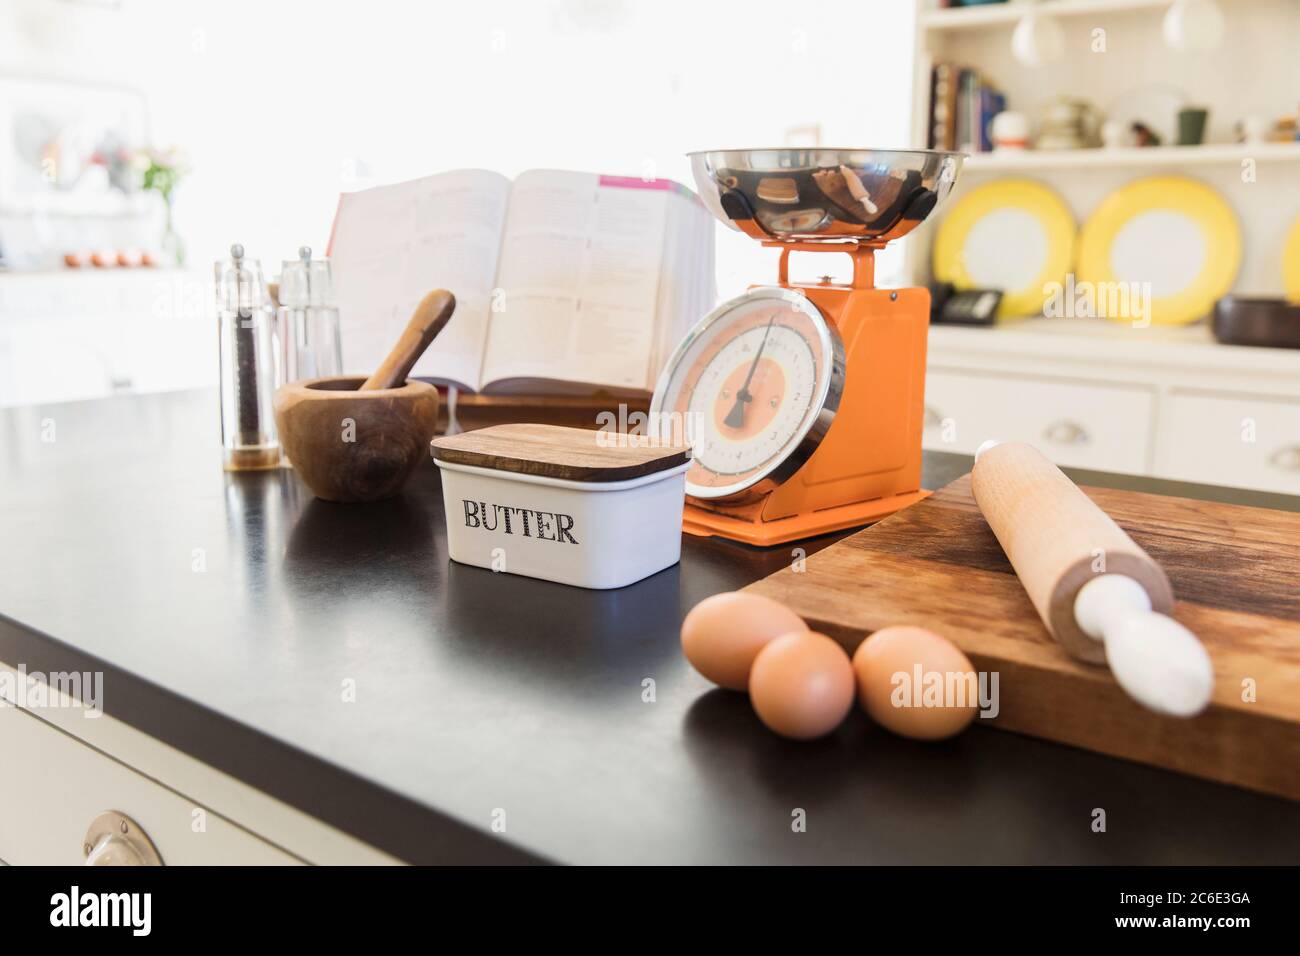 Baking ingredients on kitchen counter Stock Photo - Alamy